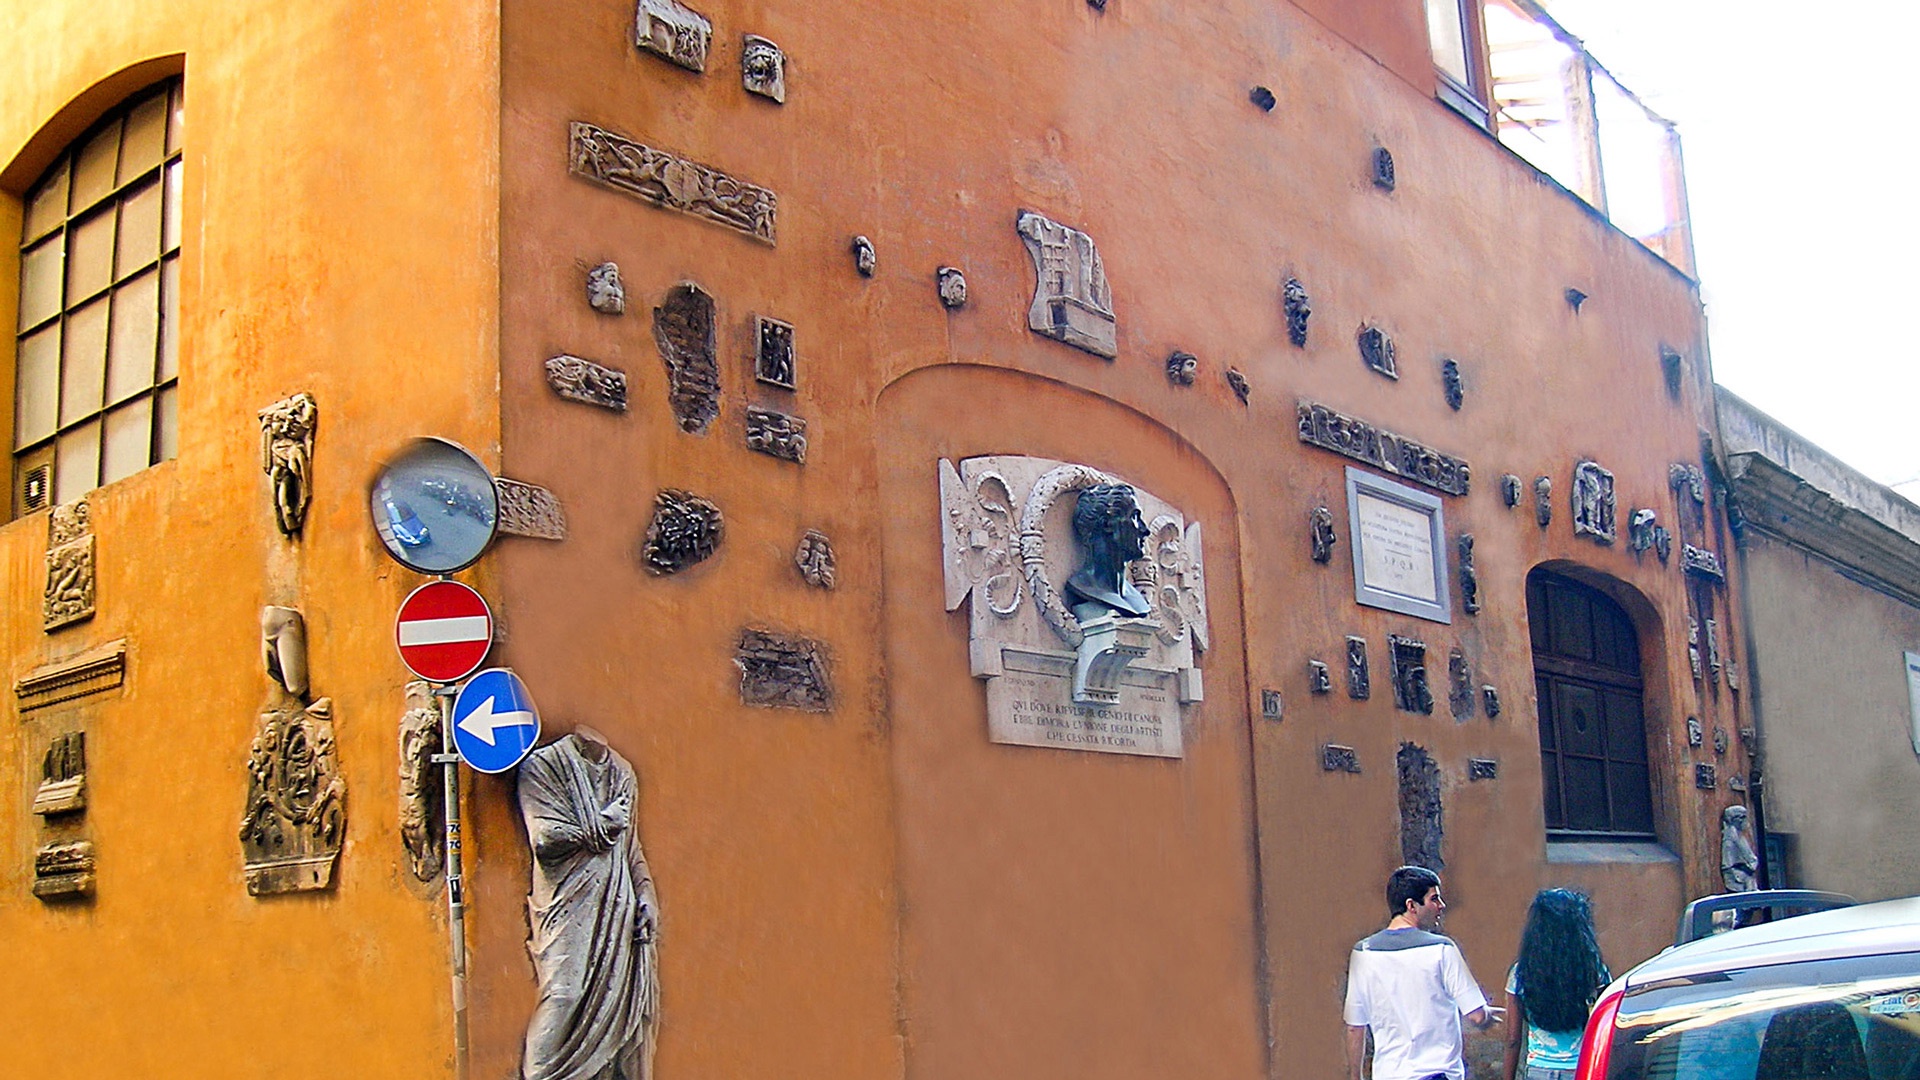 Home of famous neo-classical sculptor Antonio Canova (1757-1822) is just across the Via del Corso.